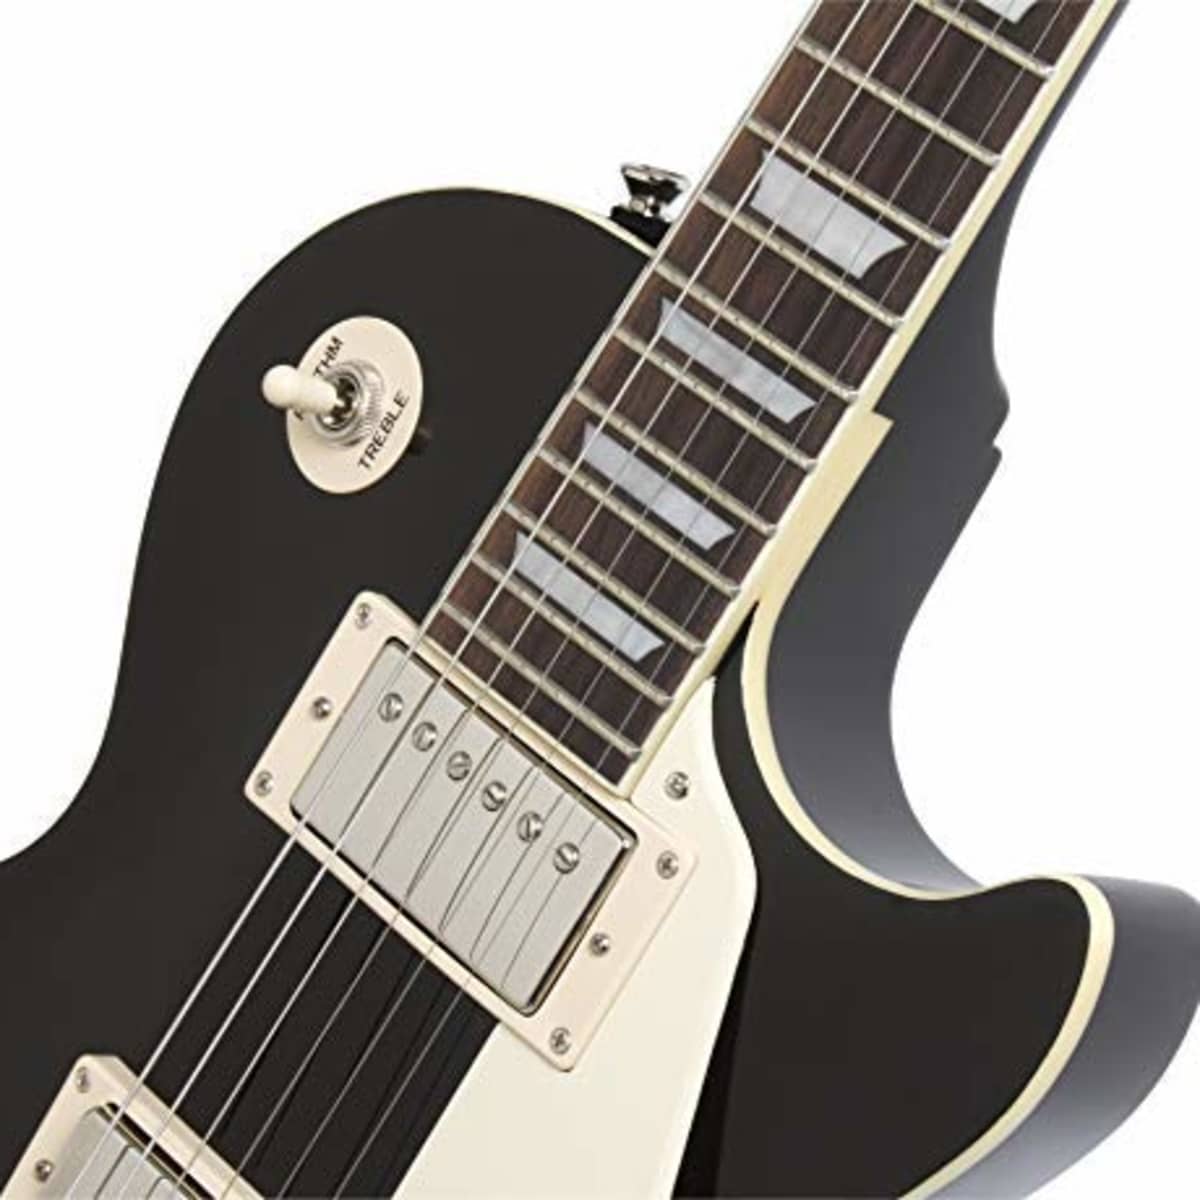 Epiphone Les Paul Standard Vs Studio Vs Custom Guitar Review Spinditty Music